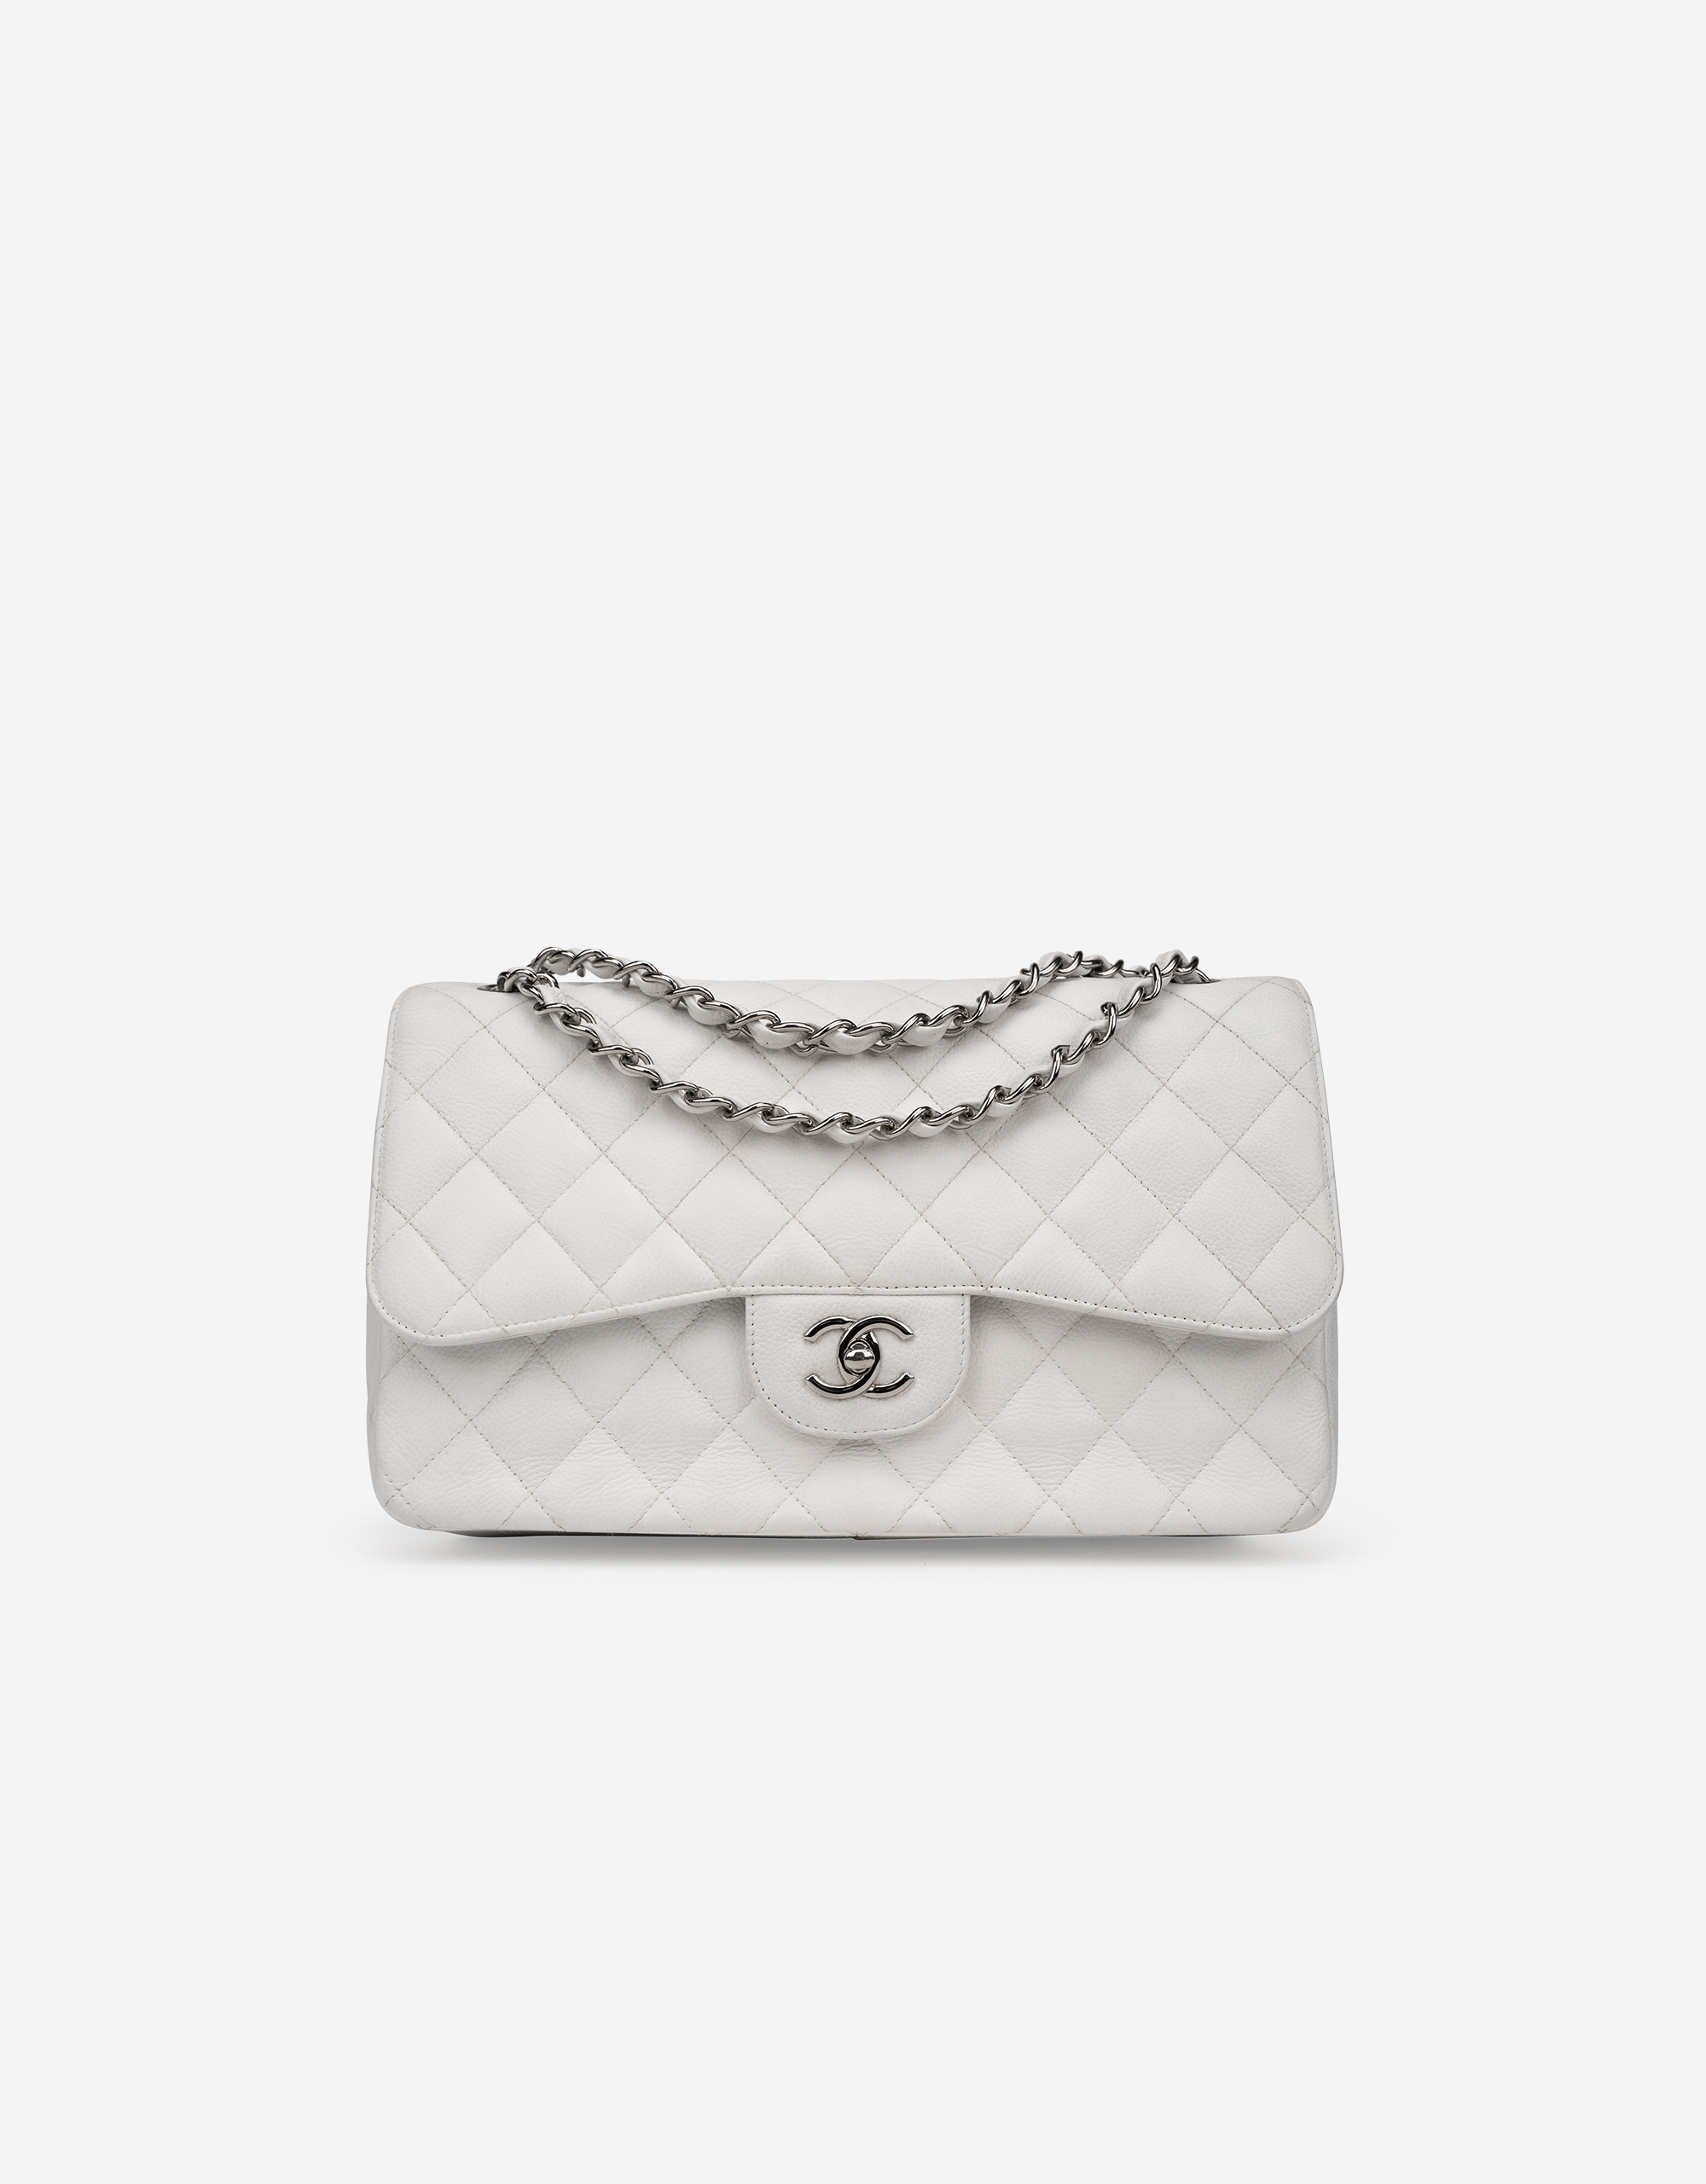 chanel white classic bag